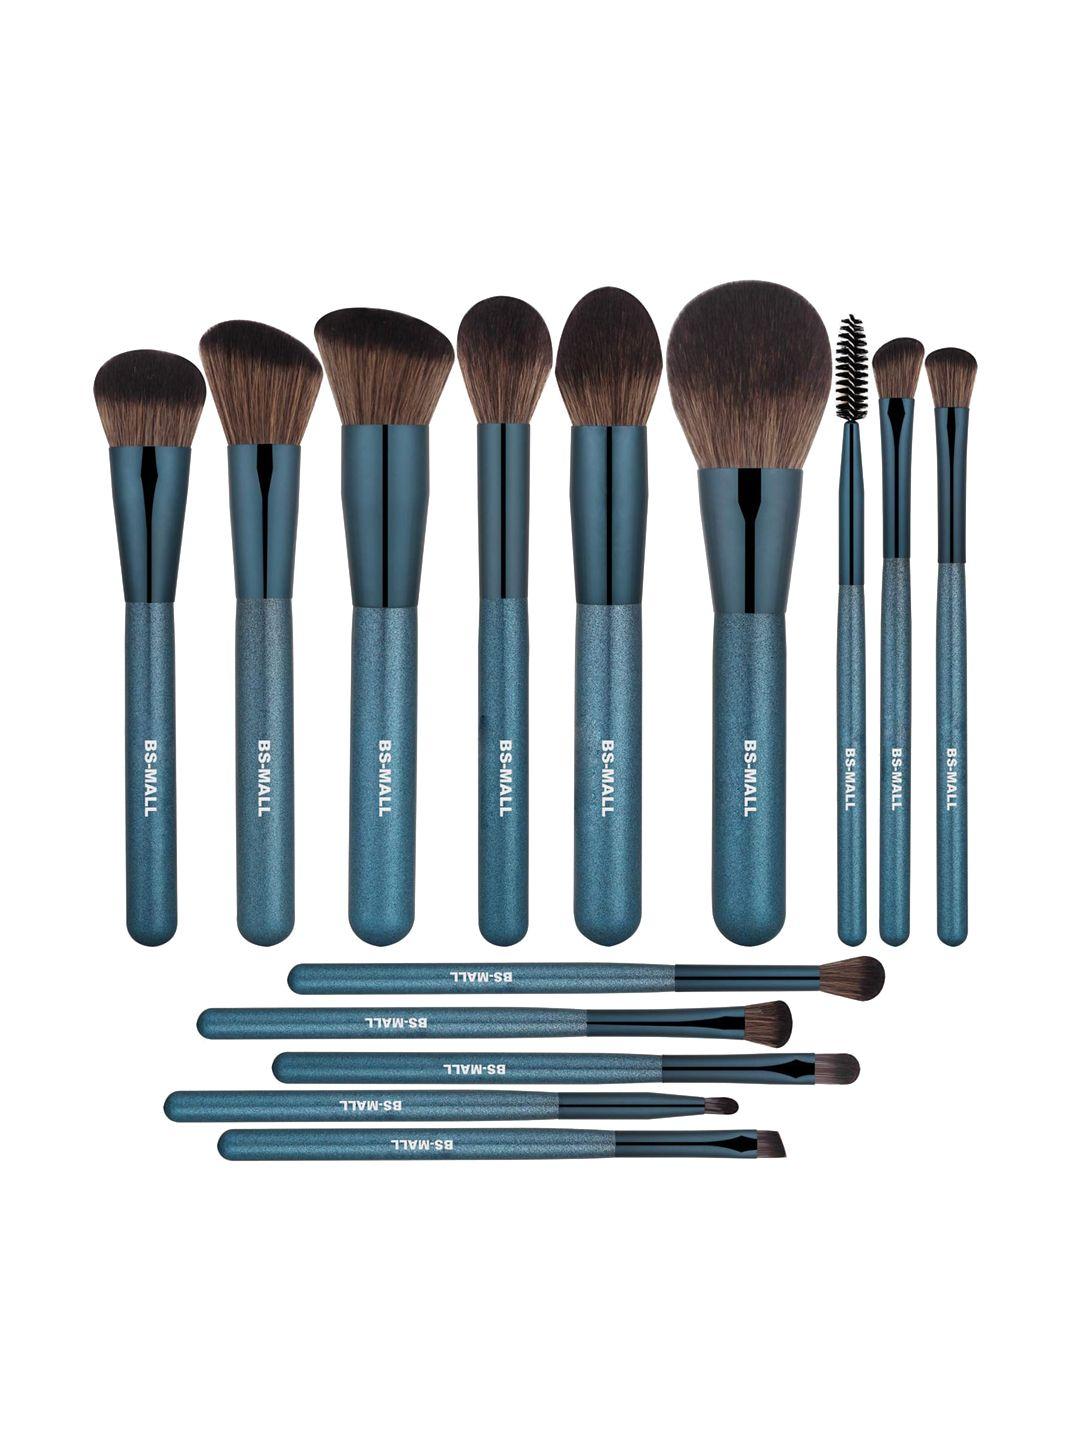 bs mall set of 14 professional foundation concealer eye shadows blush brush kit